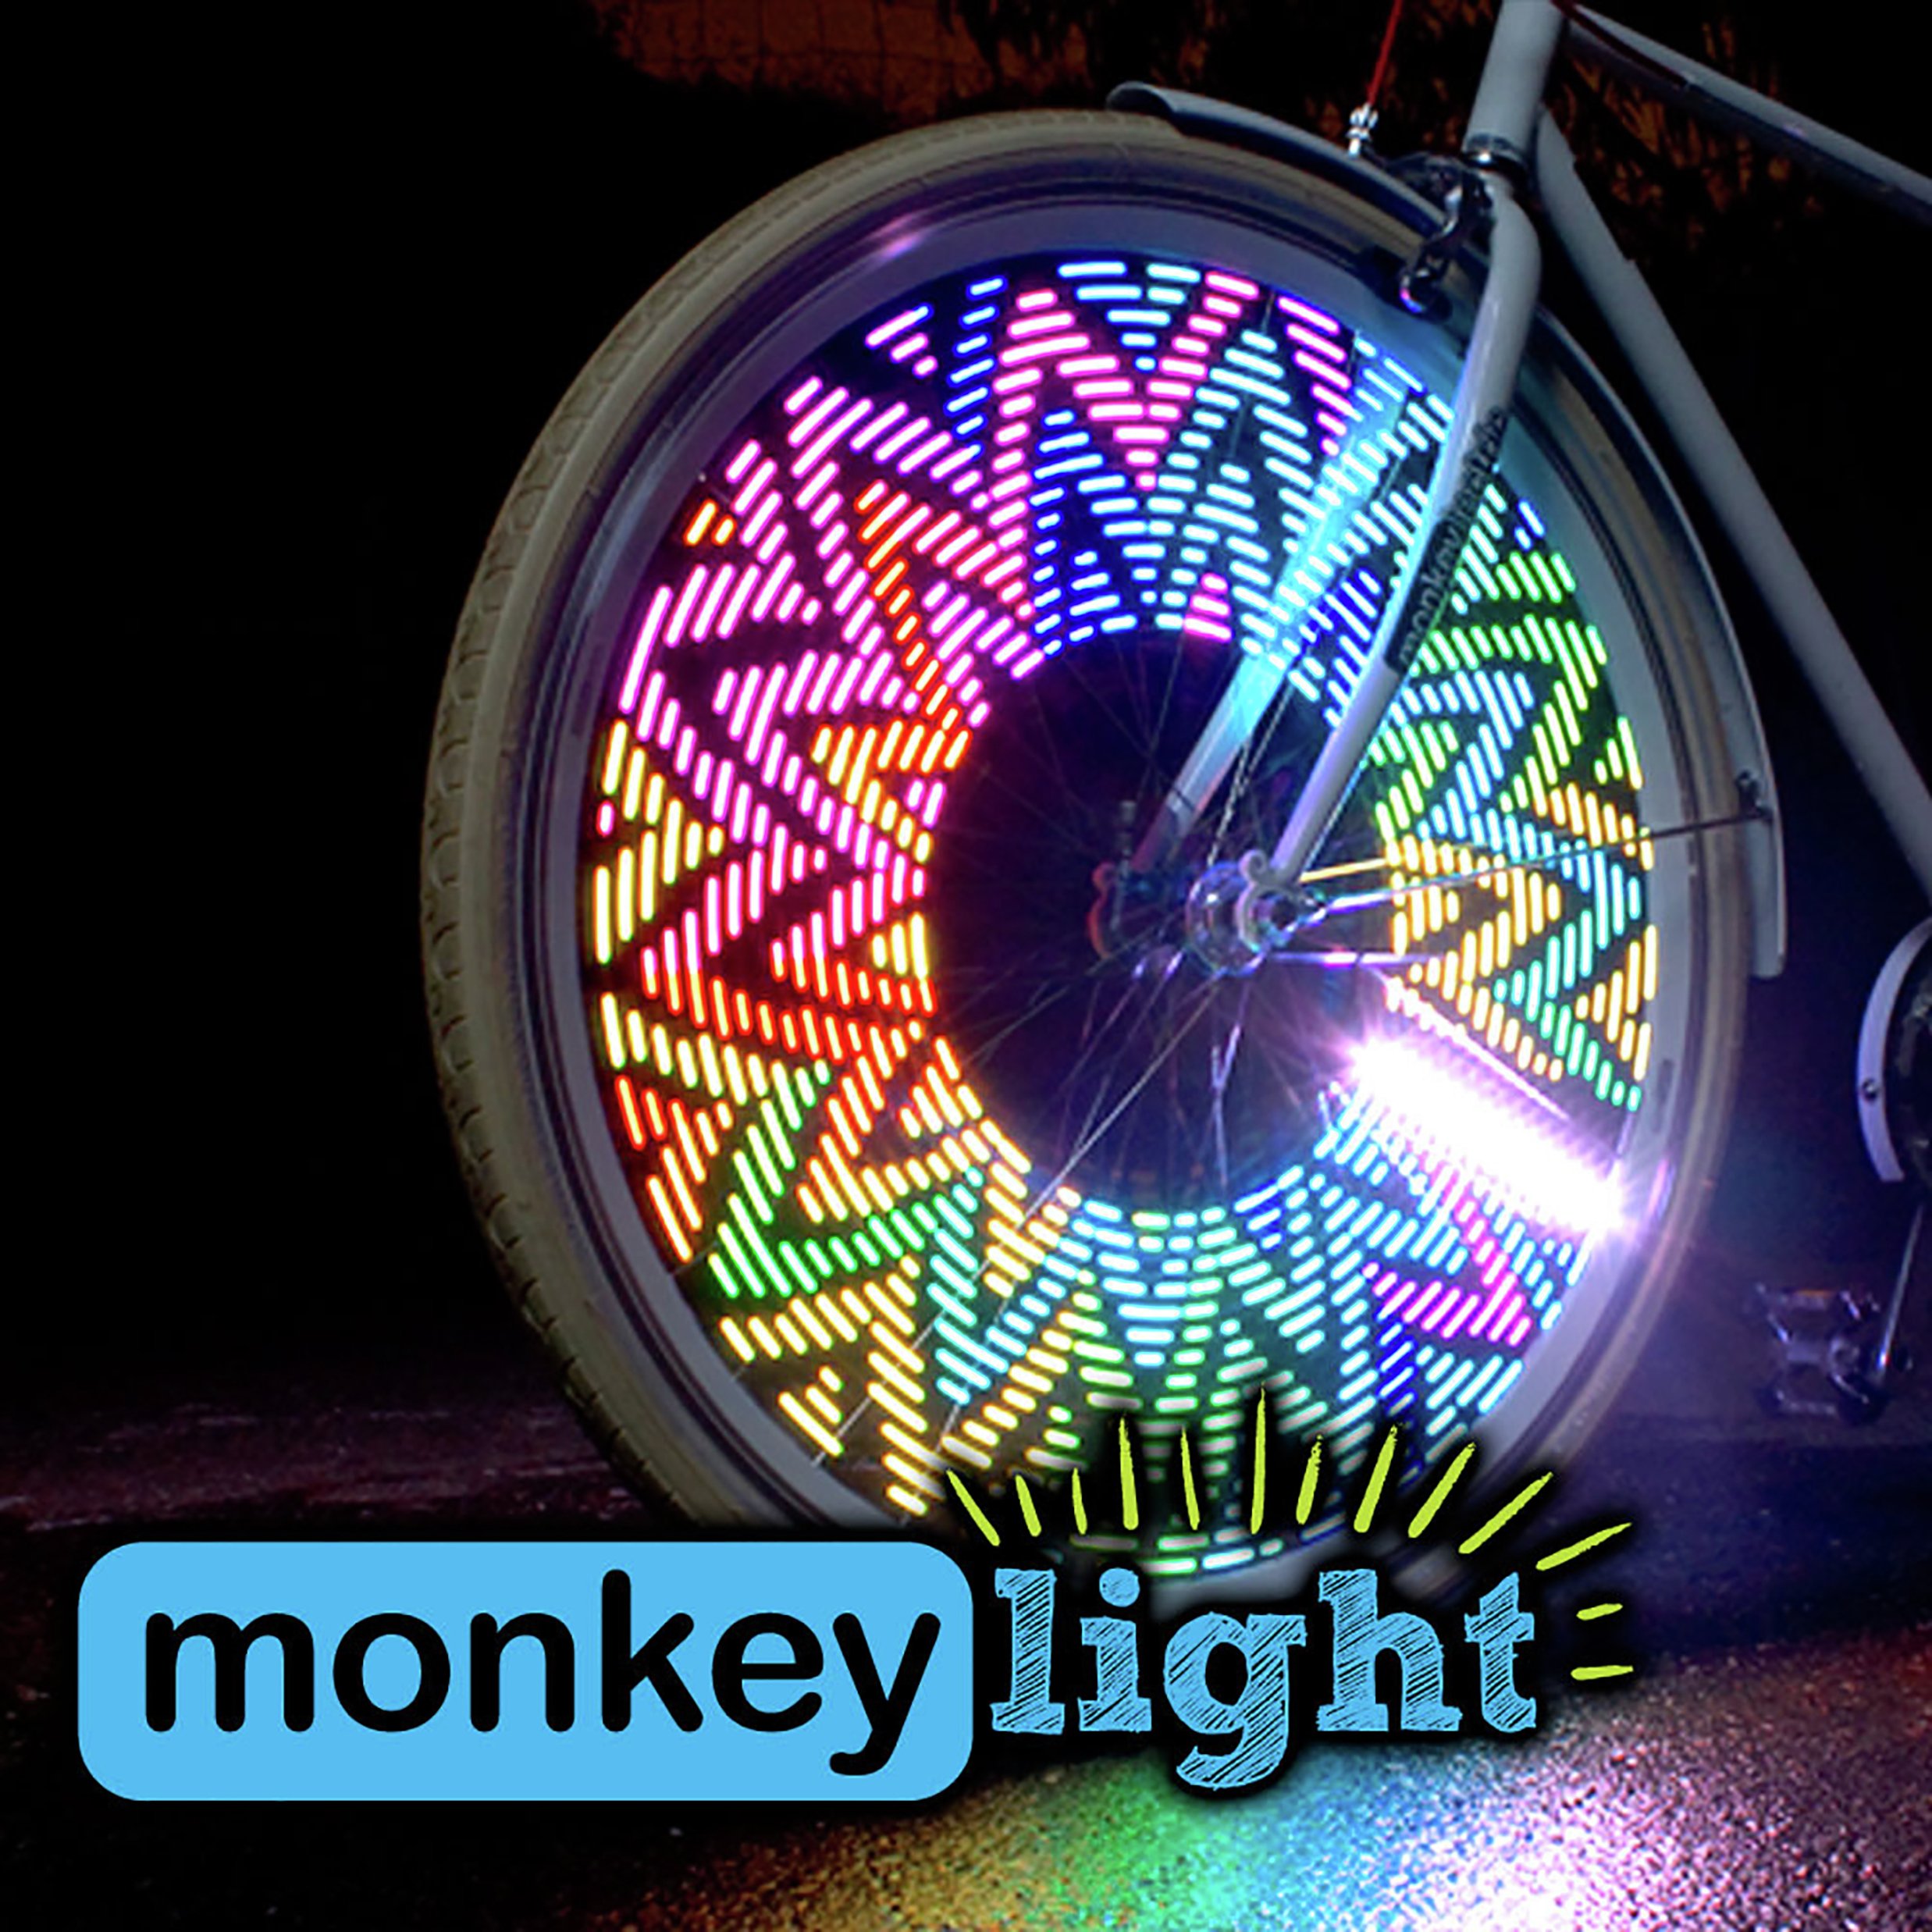 MonkeyLectric M232 200 Lumens Wheel Bike Light review